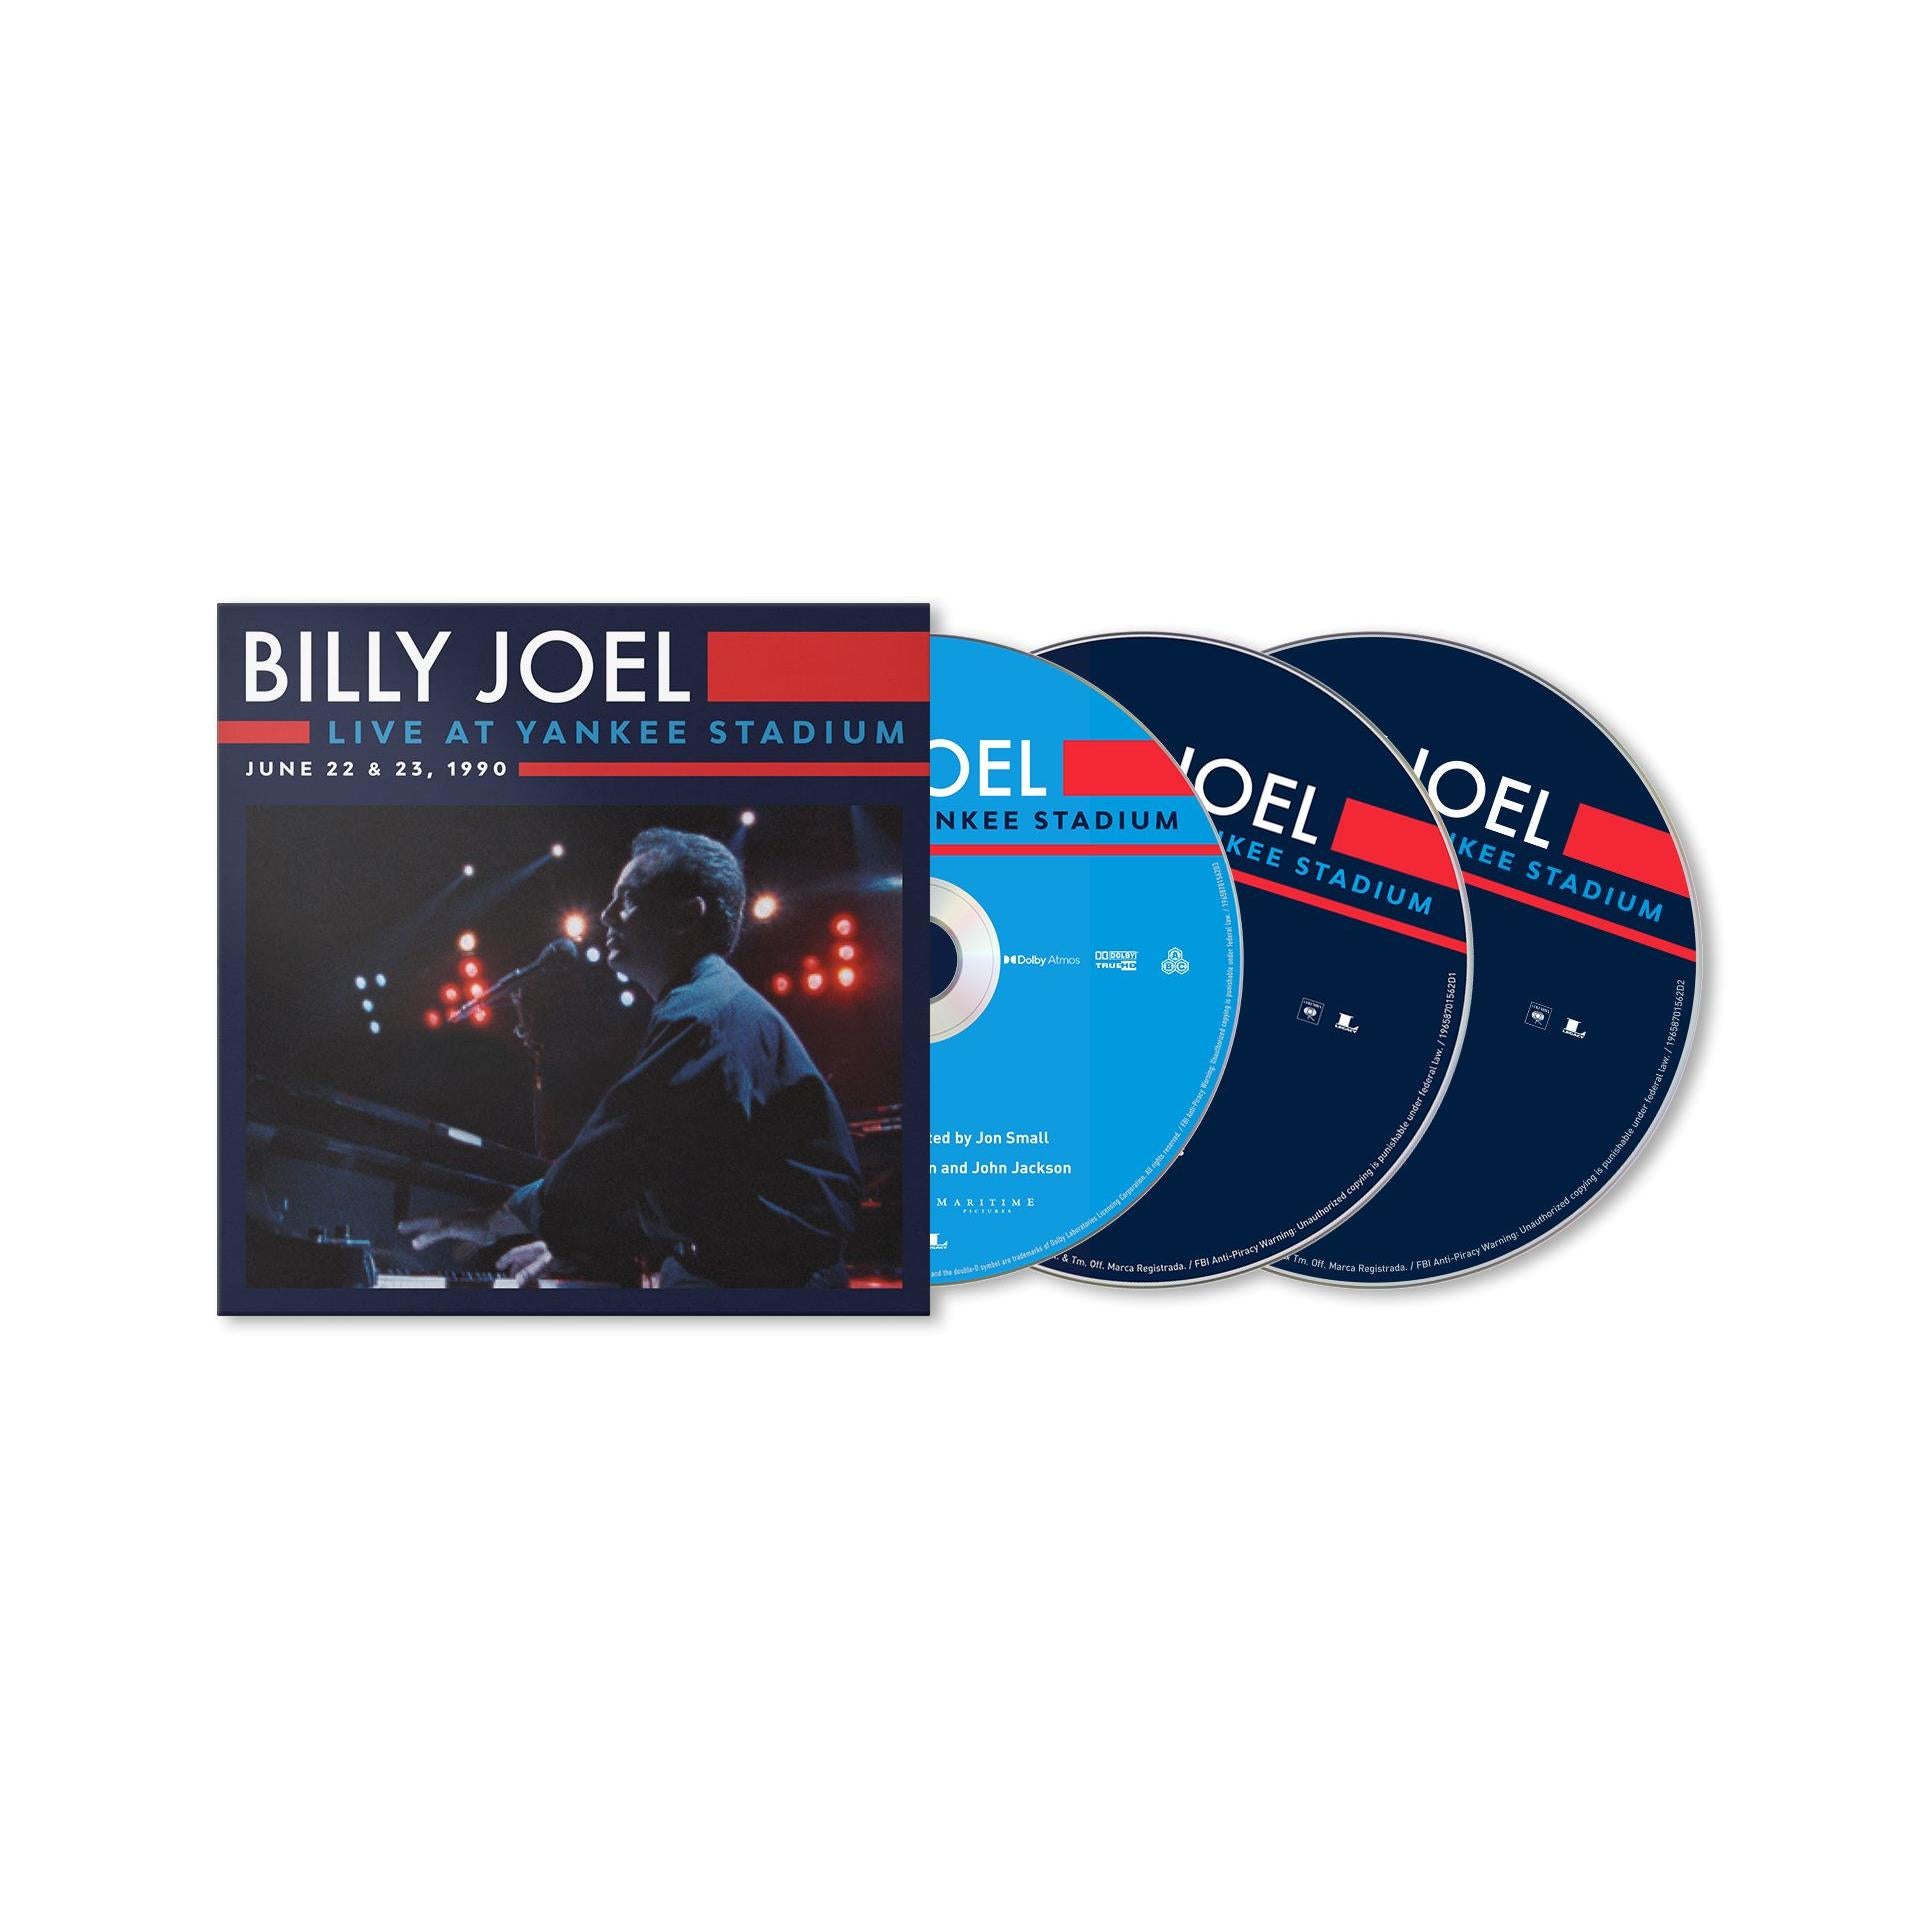 billy joel - live at yankee stadium (blu-ray pack)